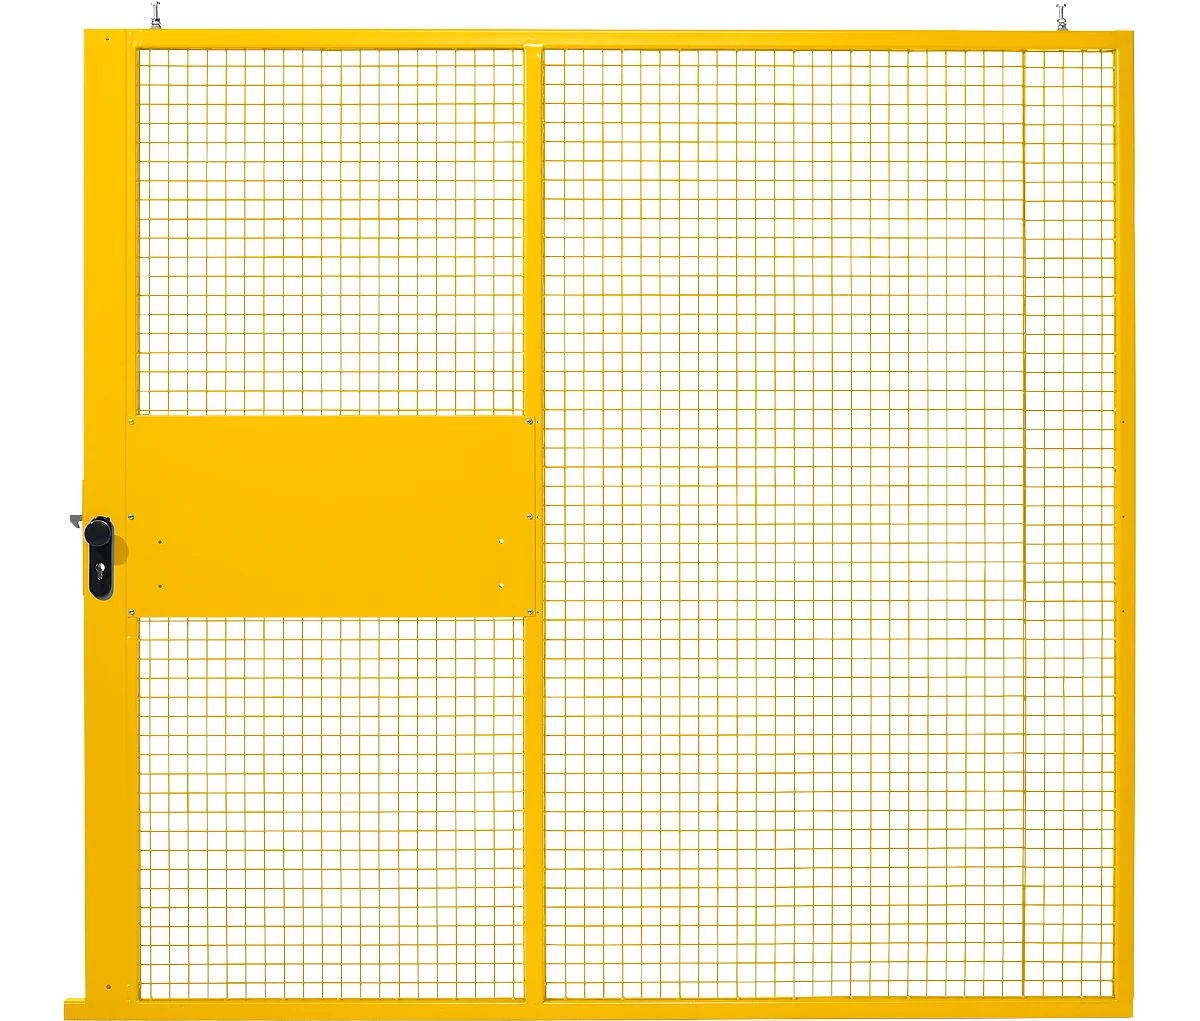 Puerta corredera, para sistema de paredes separadoras, An 2238 x Al 2110 mm, amarillo